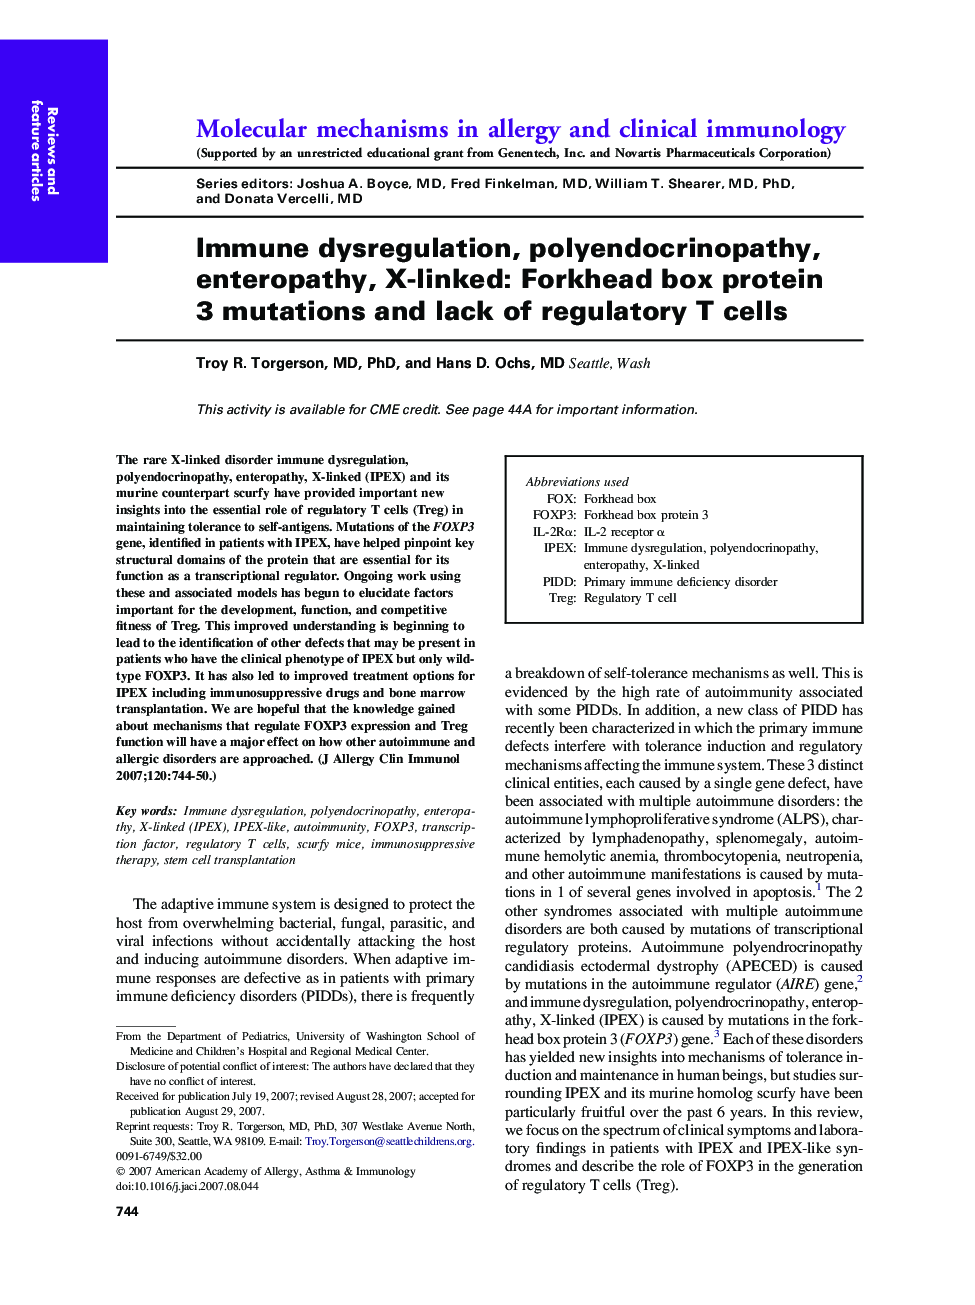 Immune dysregulation, polyendocrinopathy, enteropathy, X-linked: Forkhead box protein 3 mutations and lack of regulatory T cells 